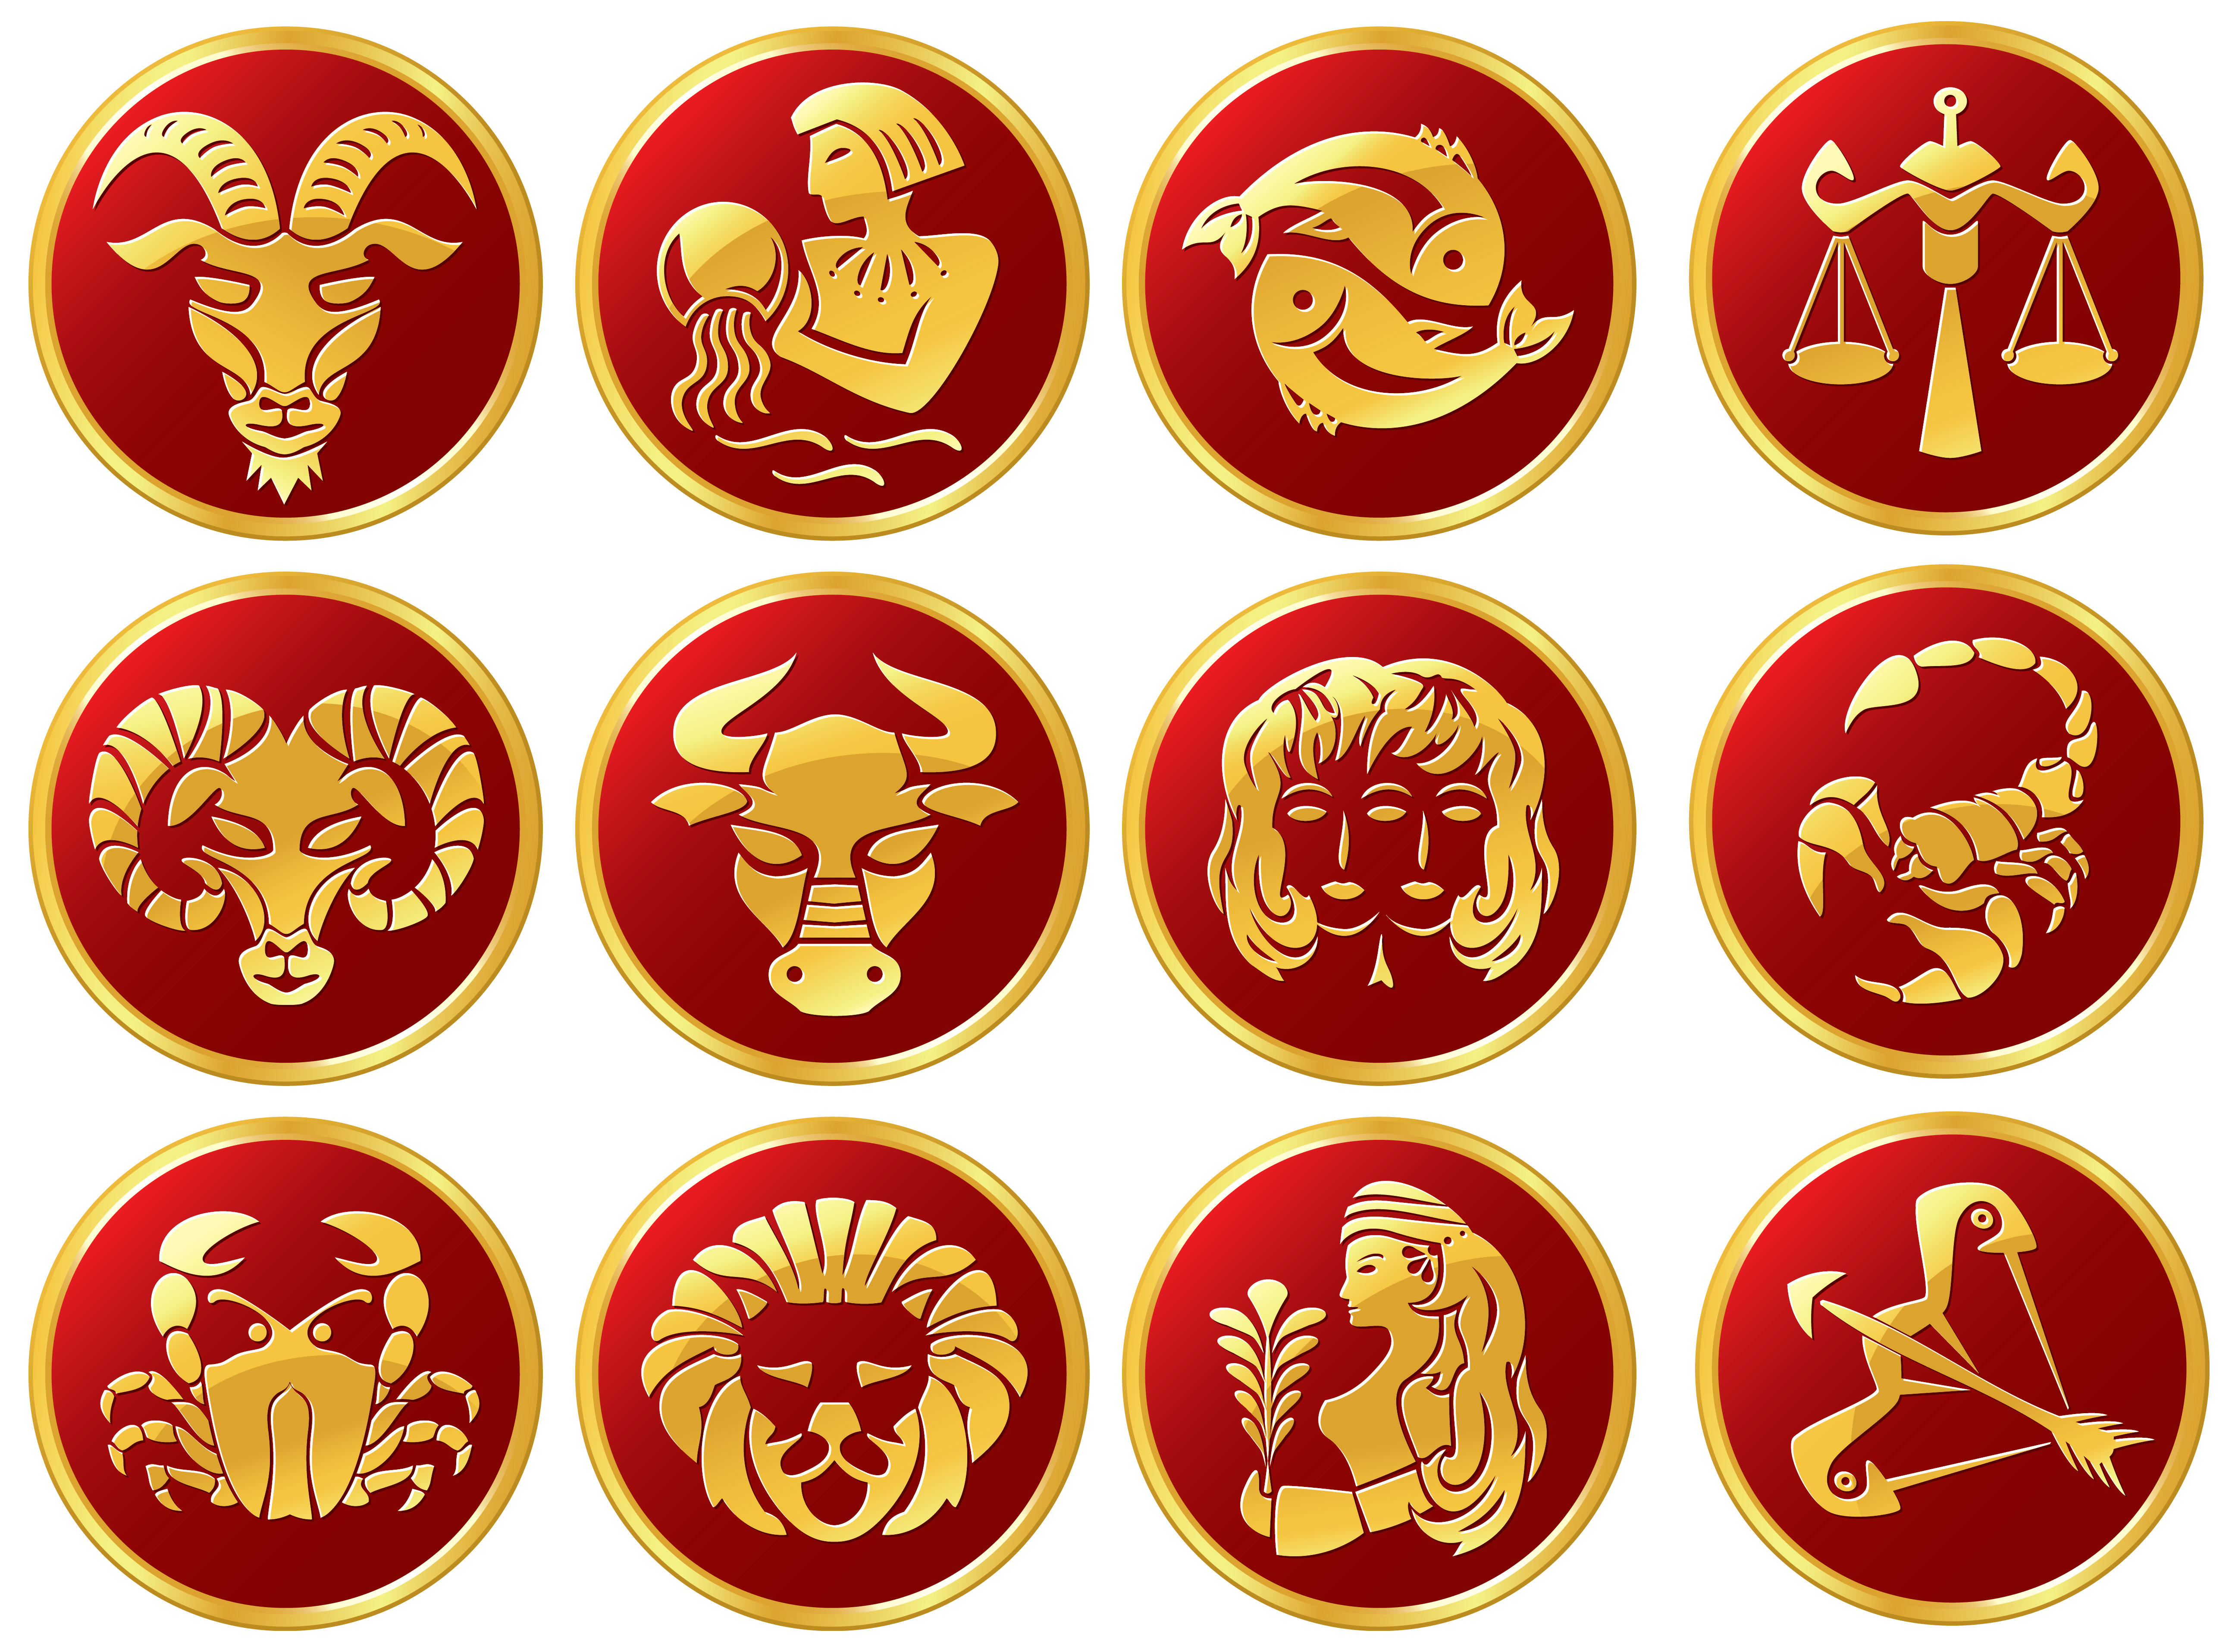 Horoscope Zodiac Signs Astrology Symbols Vector Image - Reverasite